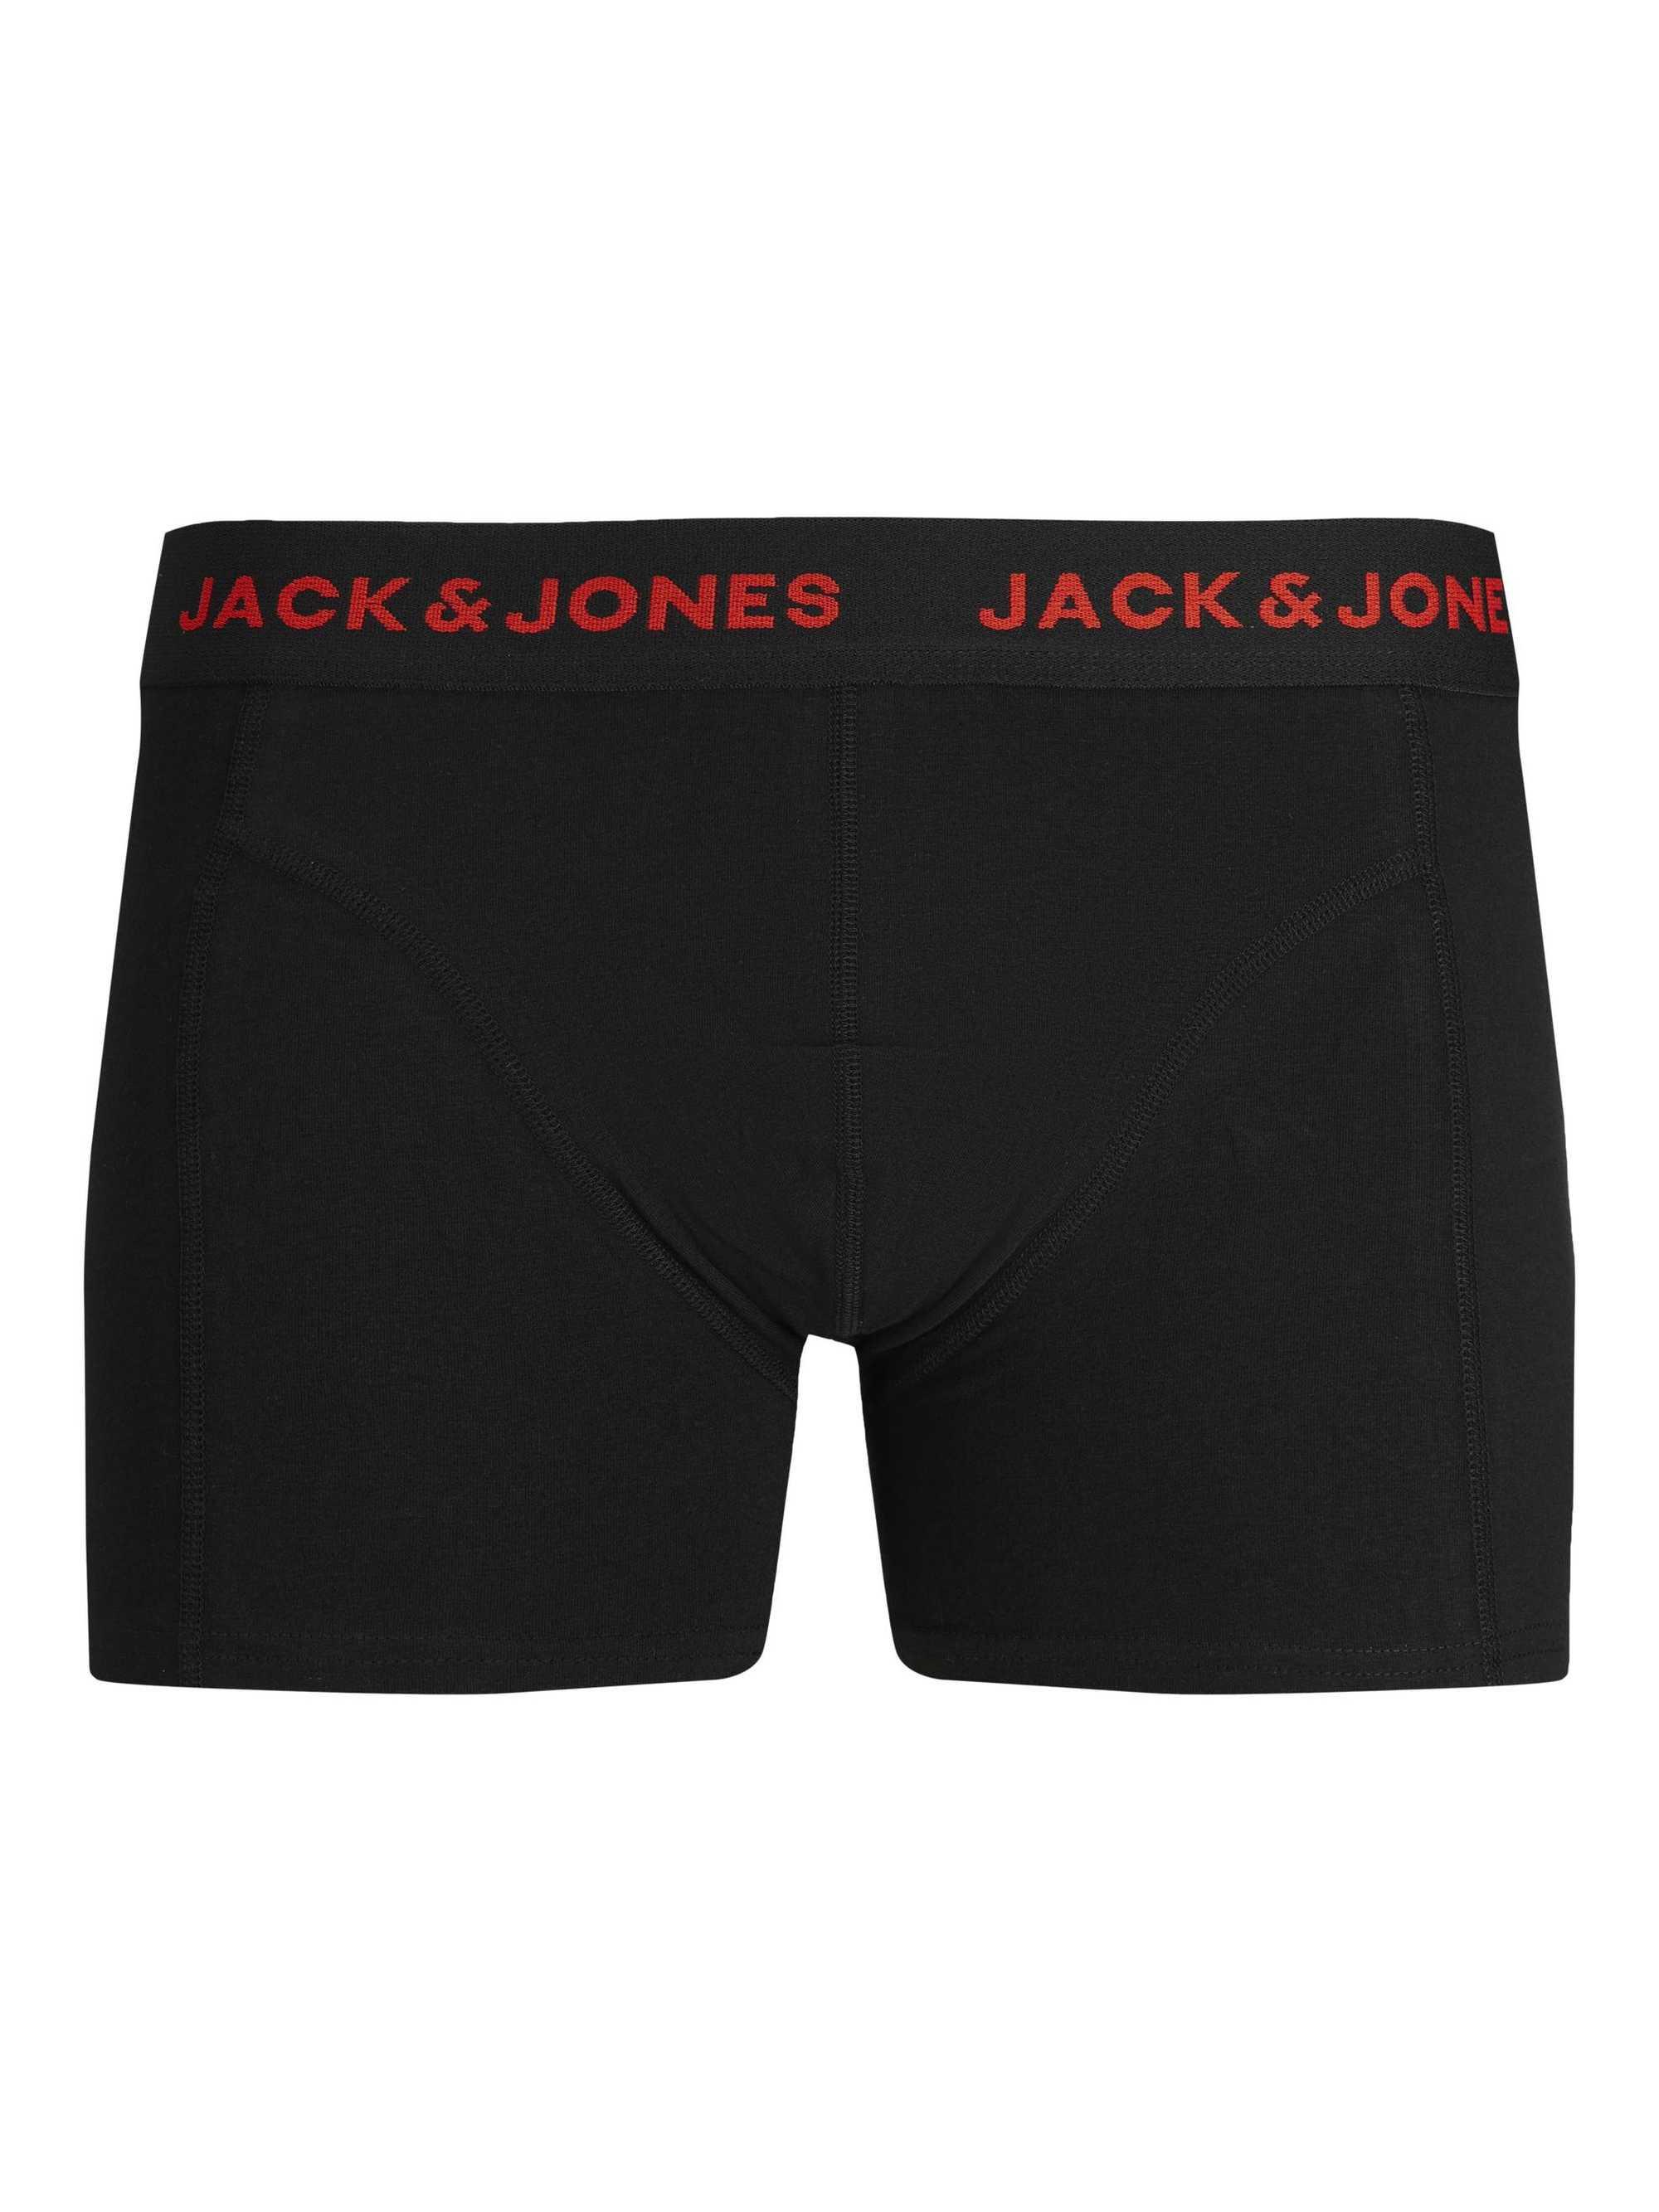 JACK & JONES  Boxer  Stretch-JACBLACK FRIDAY TRUNKS 5P 